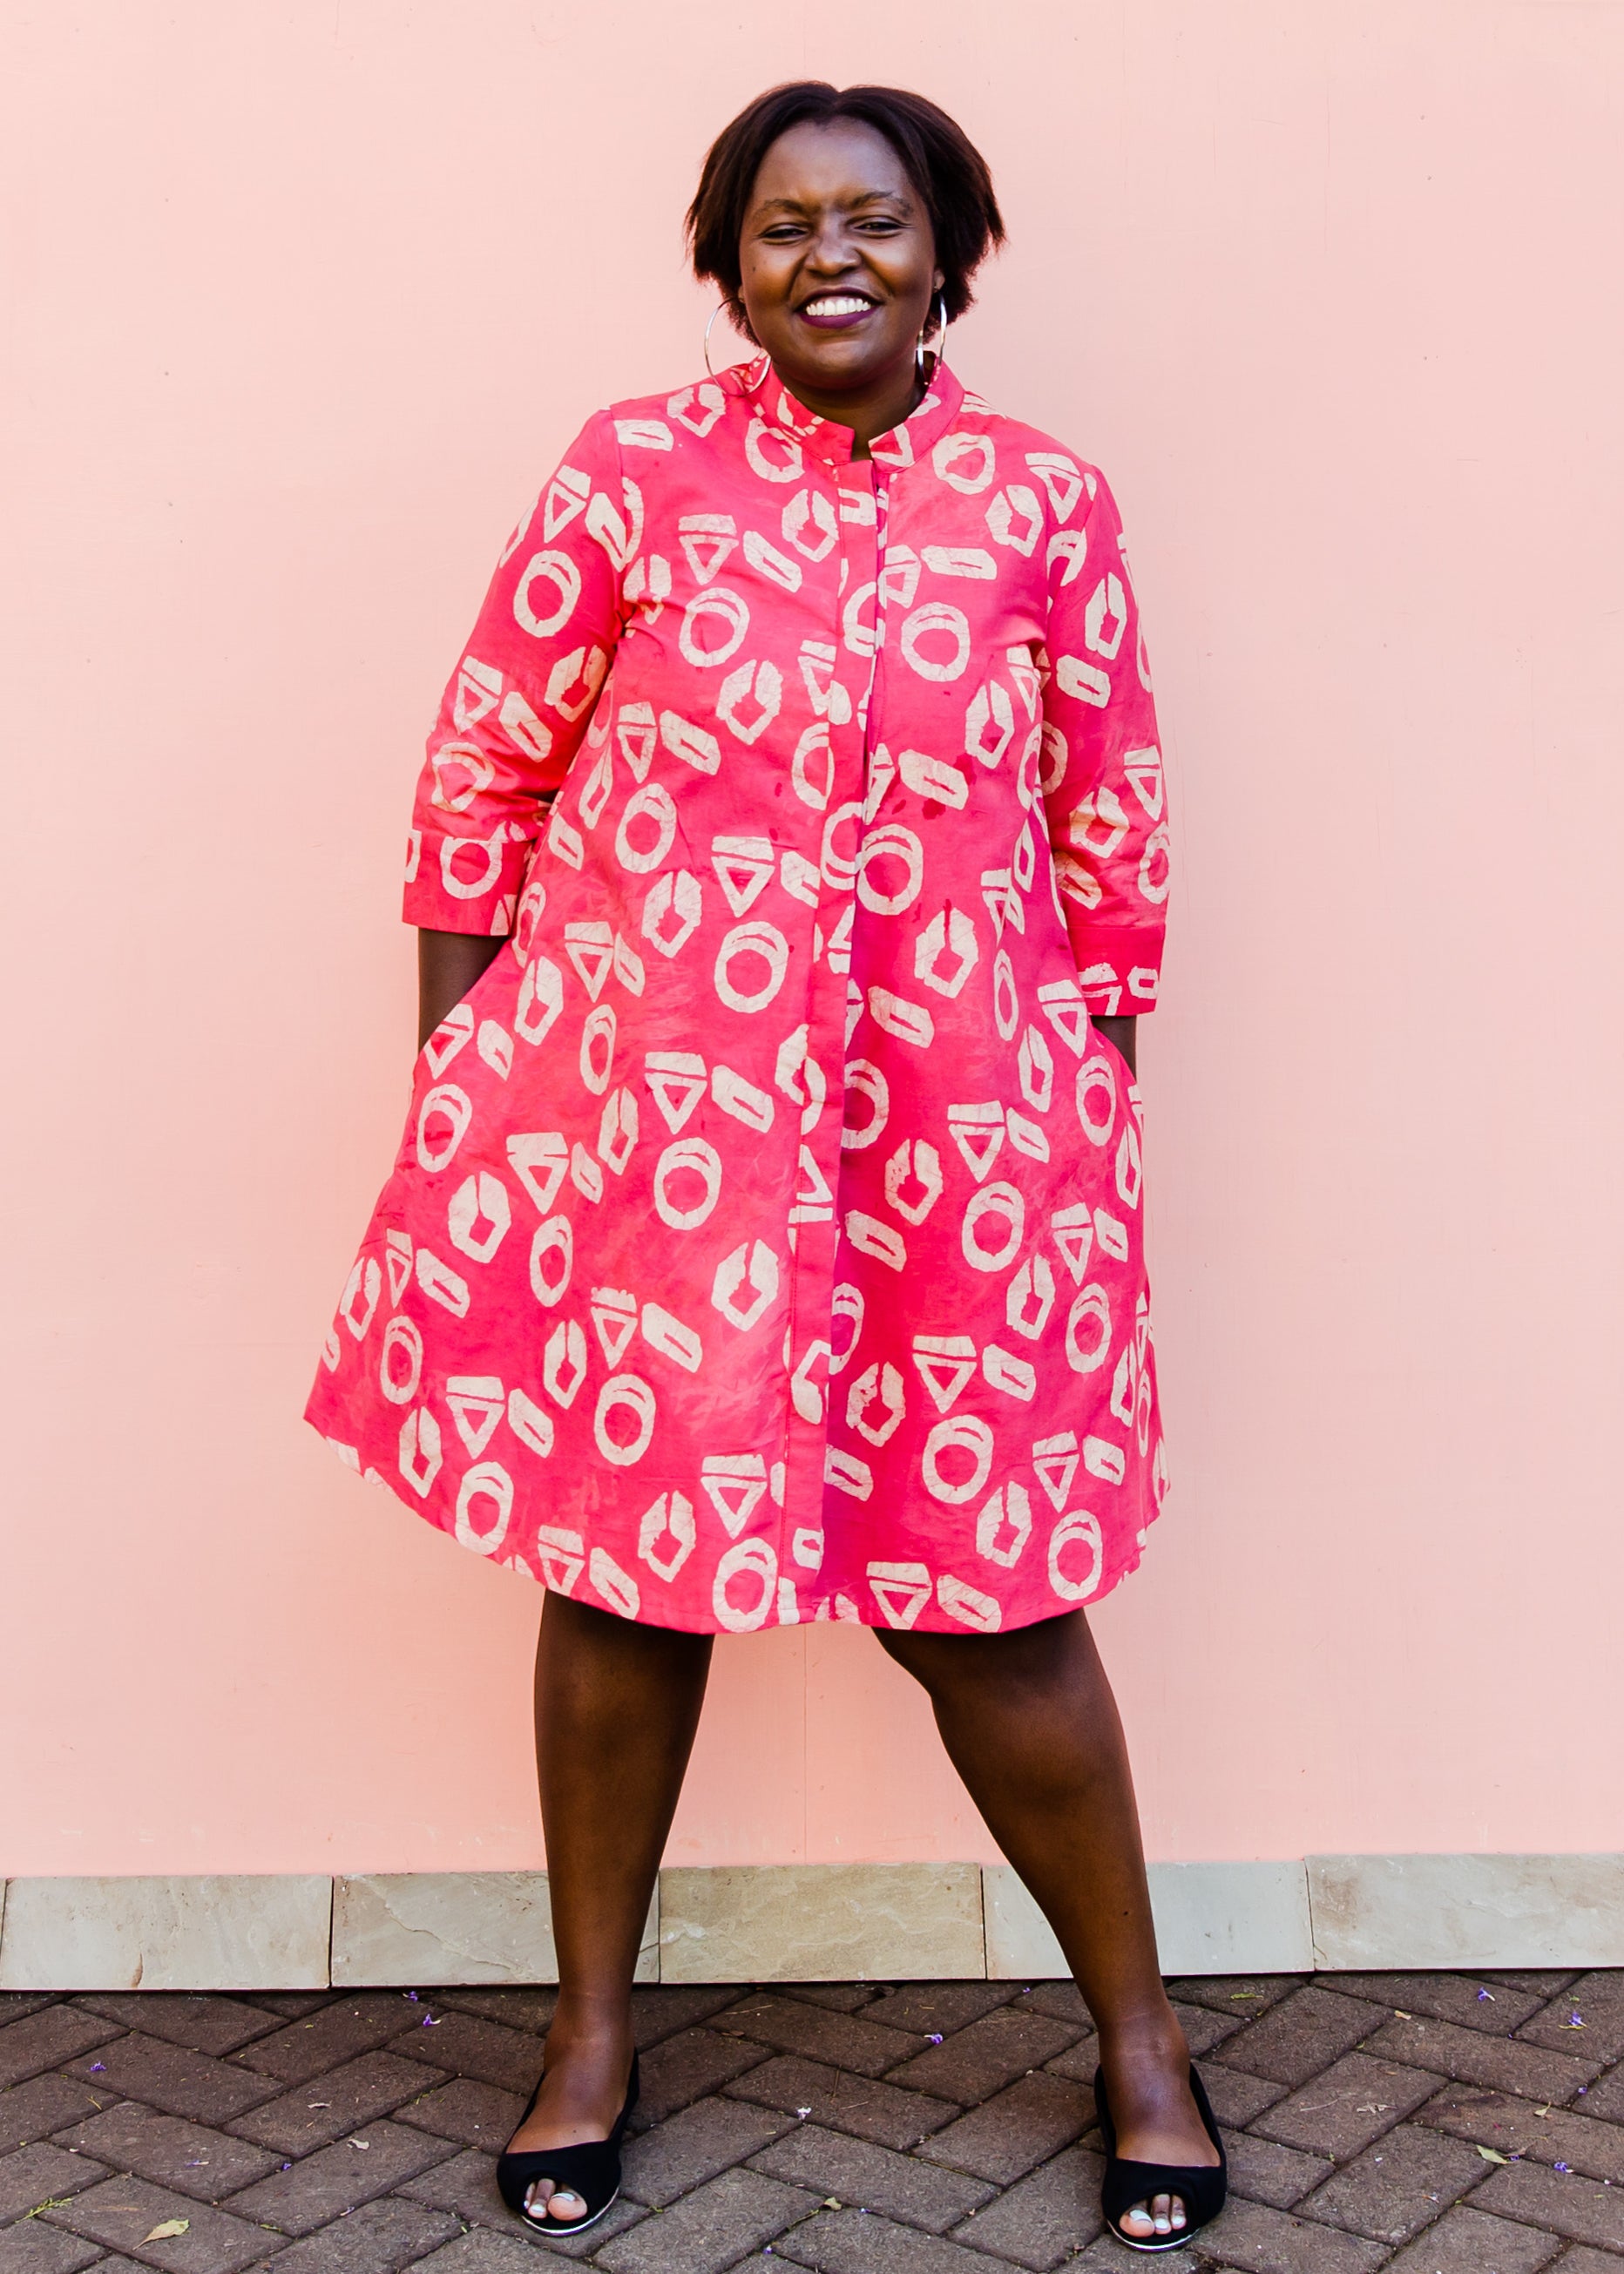 model wearing a pink and white geometric print dress